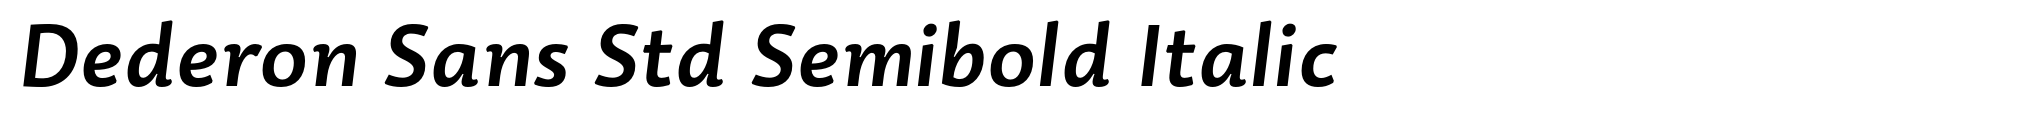 Dederon Sans Std Semibold Italic image